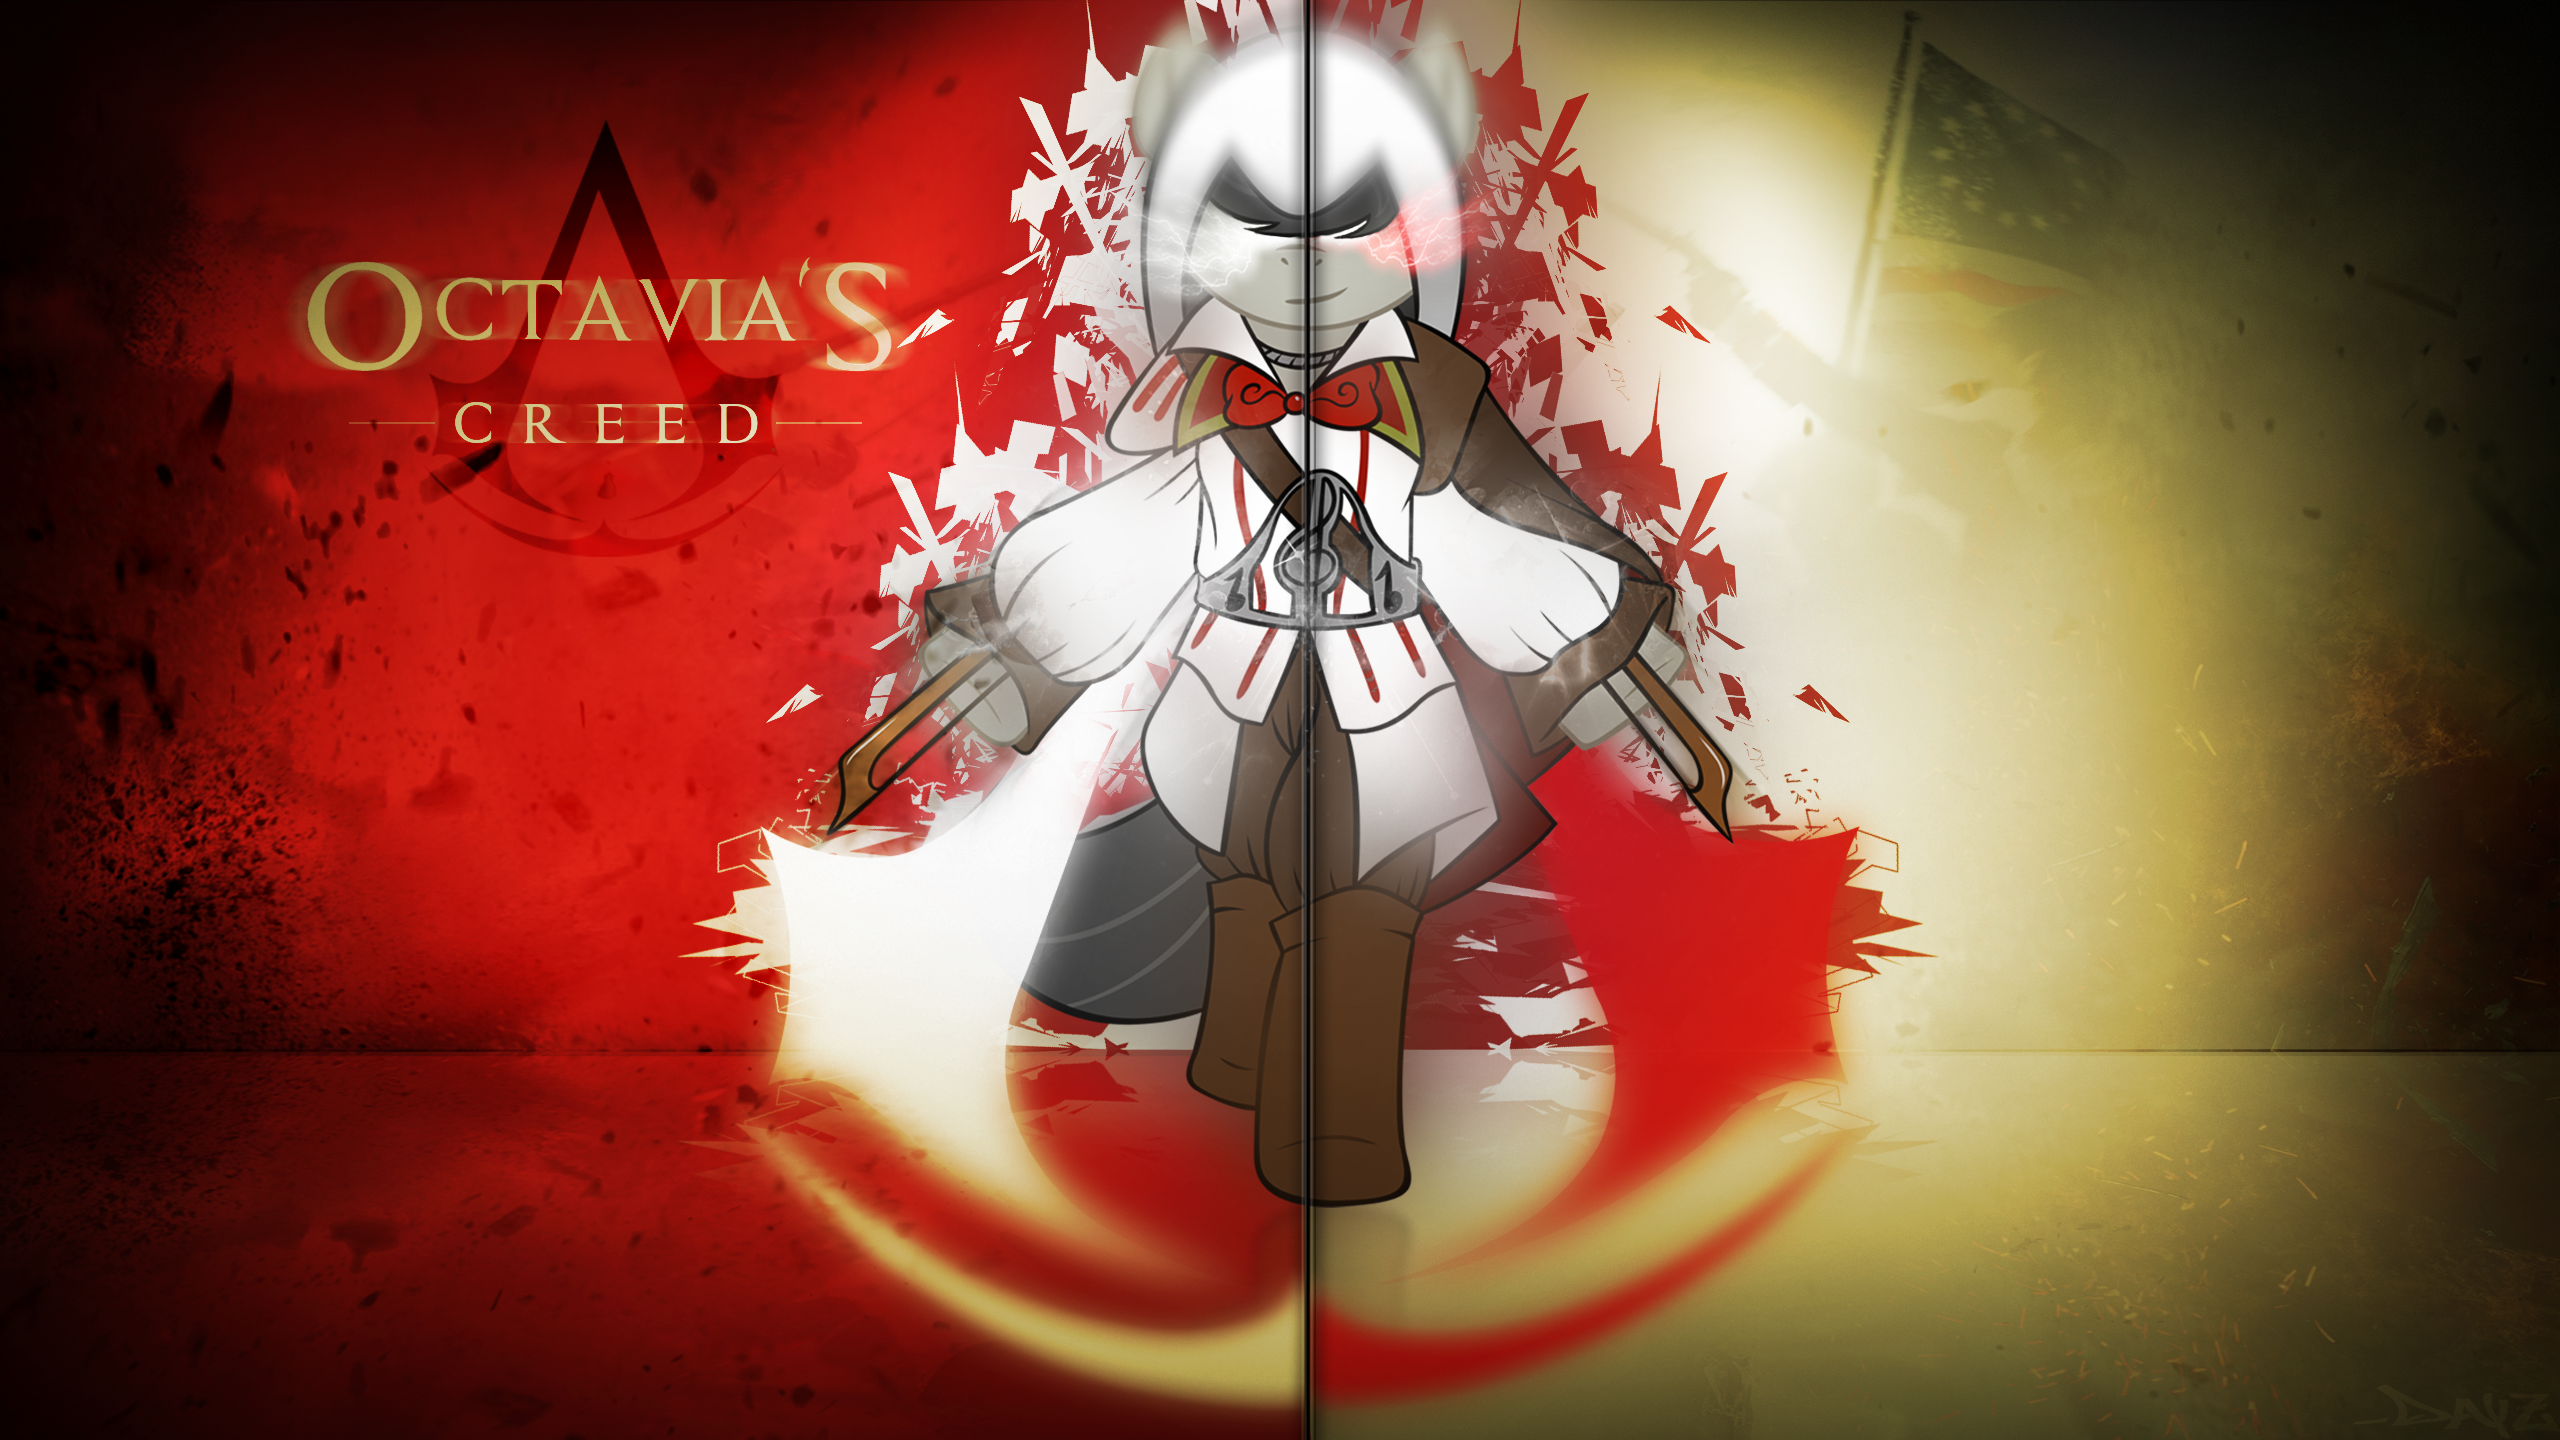 Octavia's Creed by forgotten5p1rit and Shelmo69